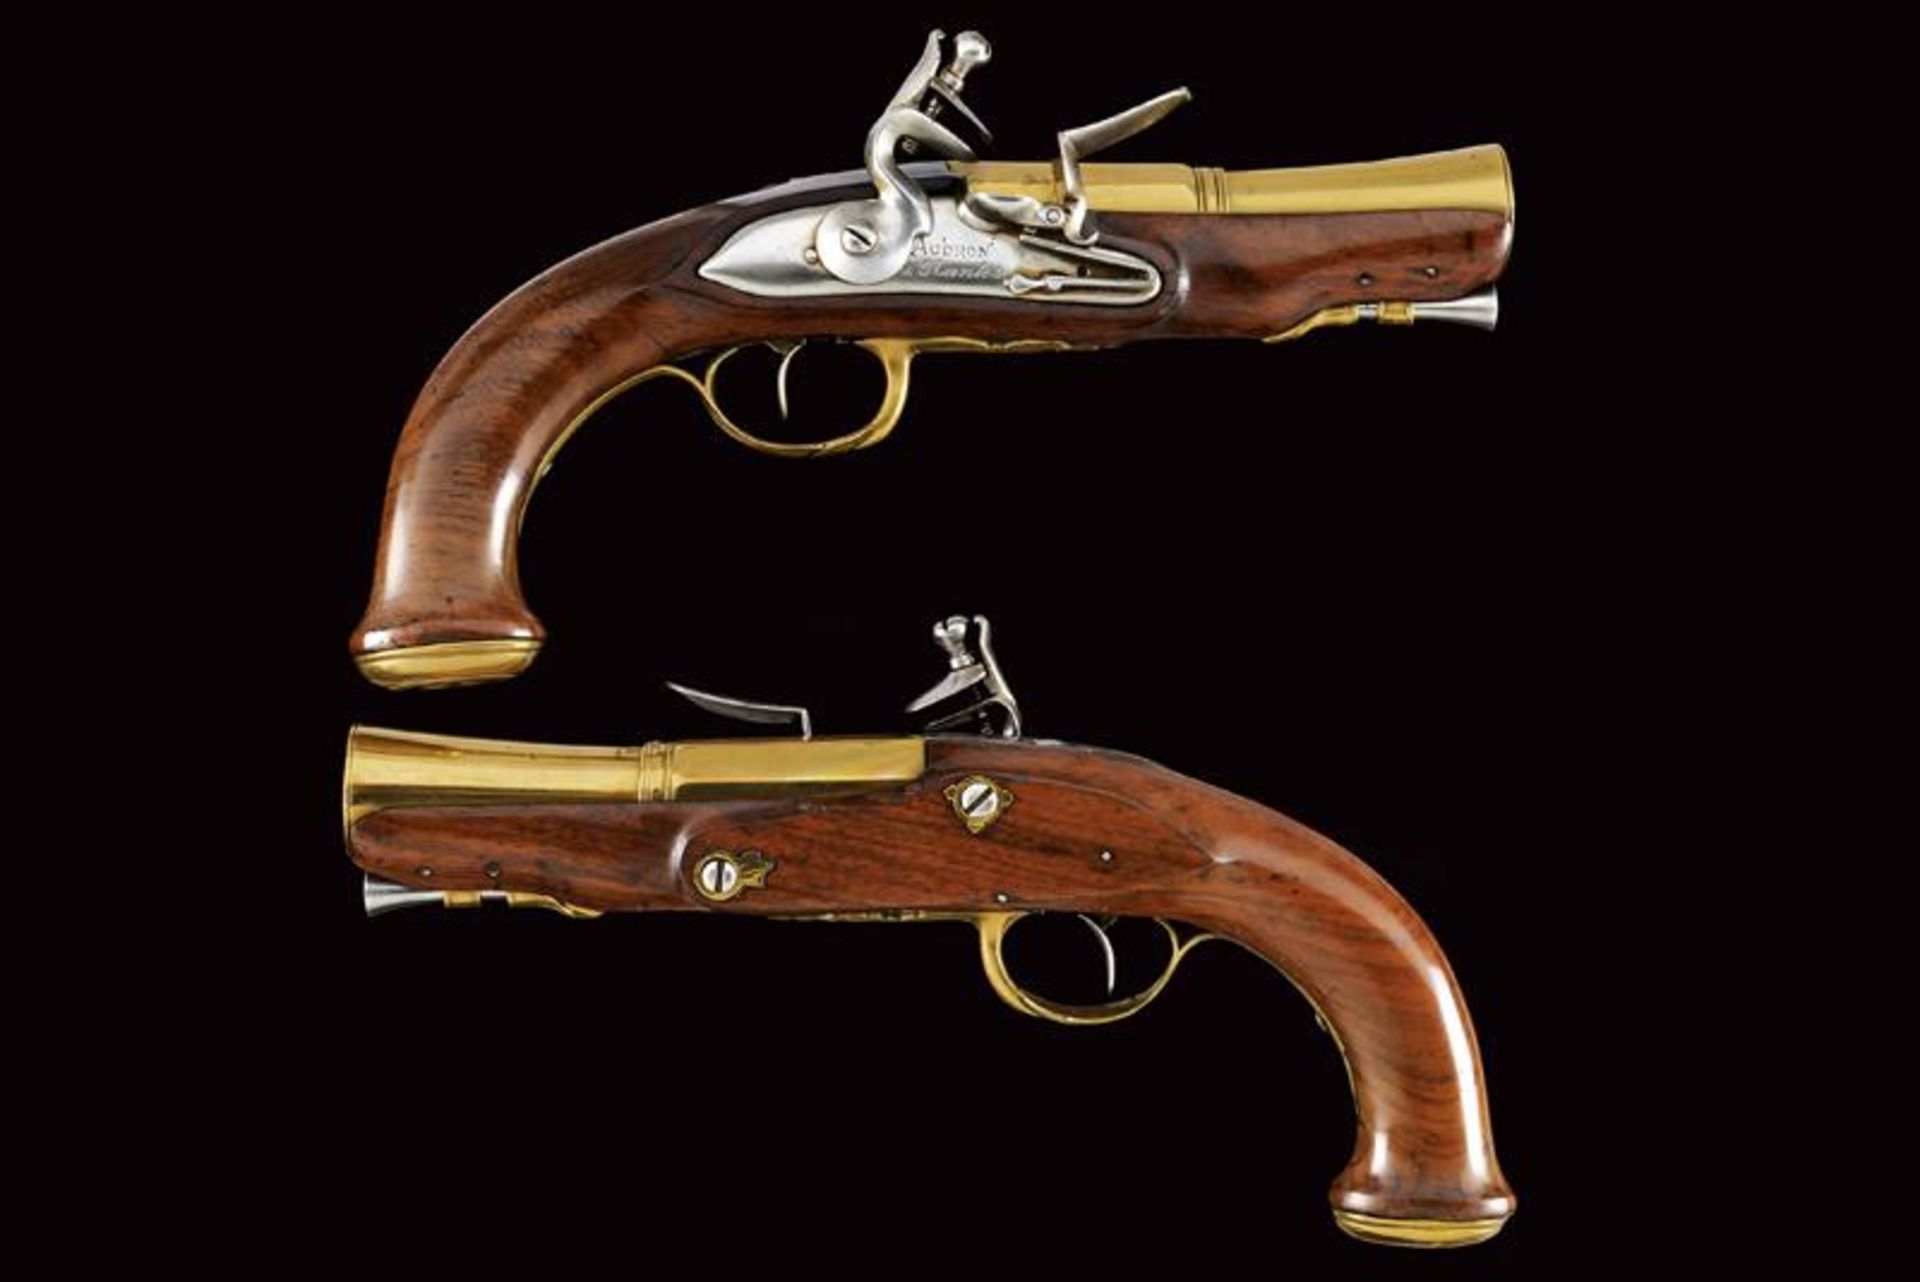 A pair of blunderbuss flintlock pistol for a naval officer